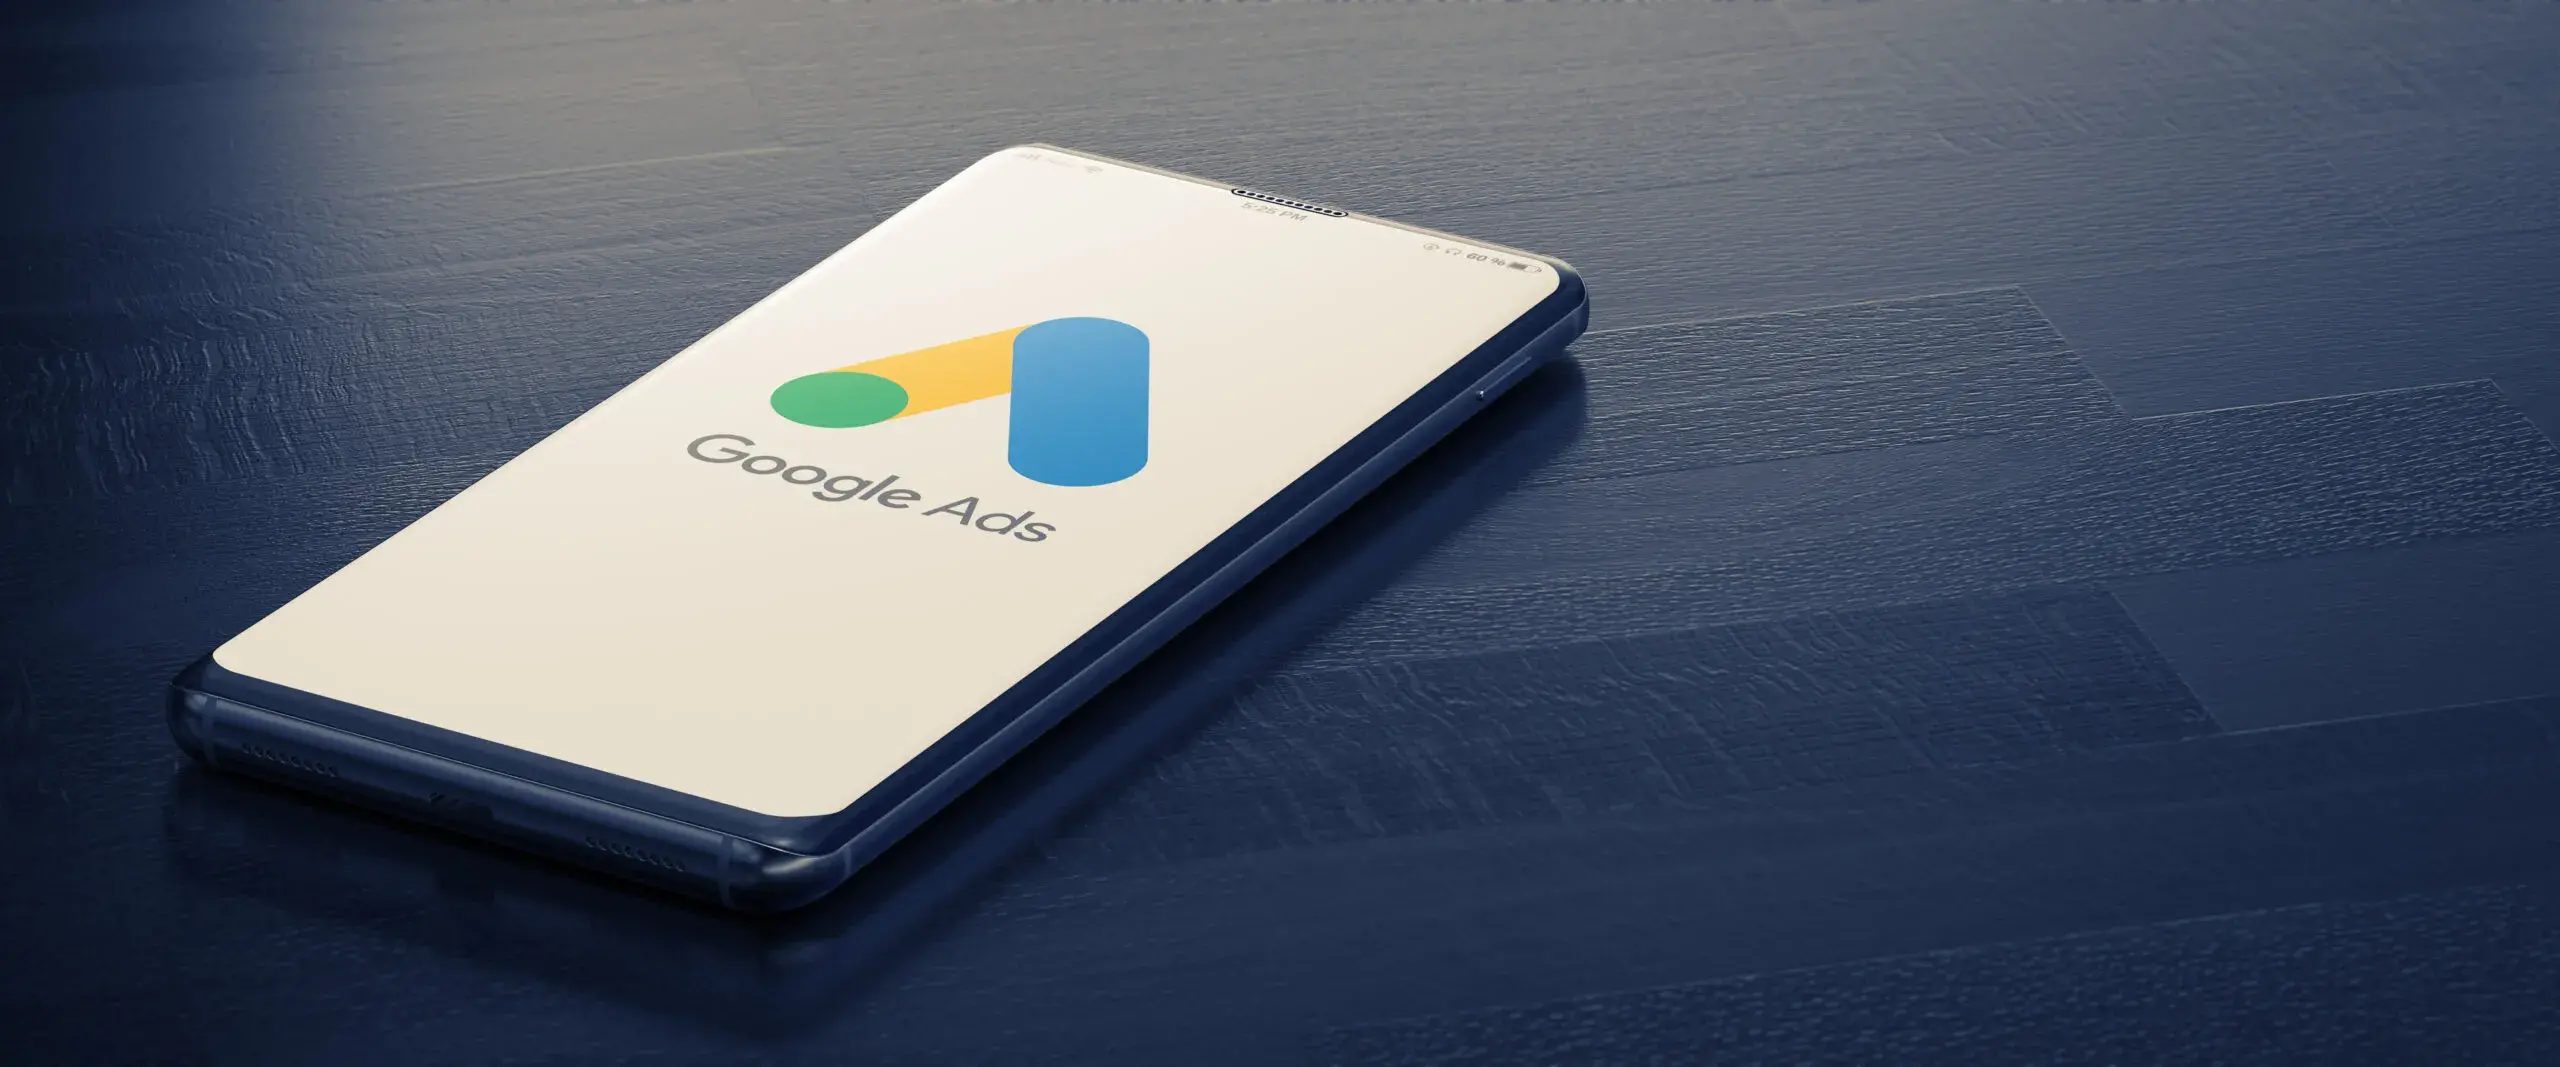 Smartphone con logo de Google Ads